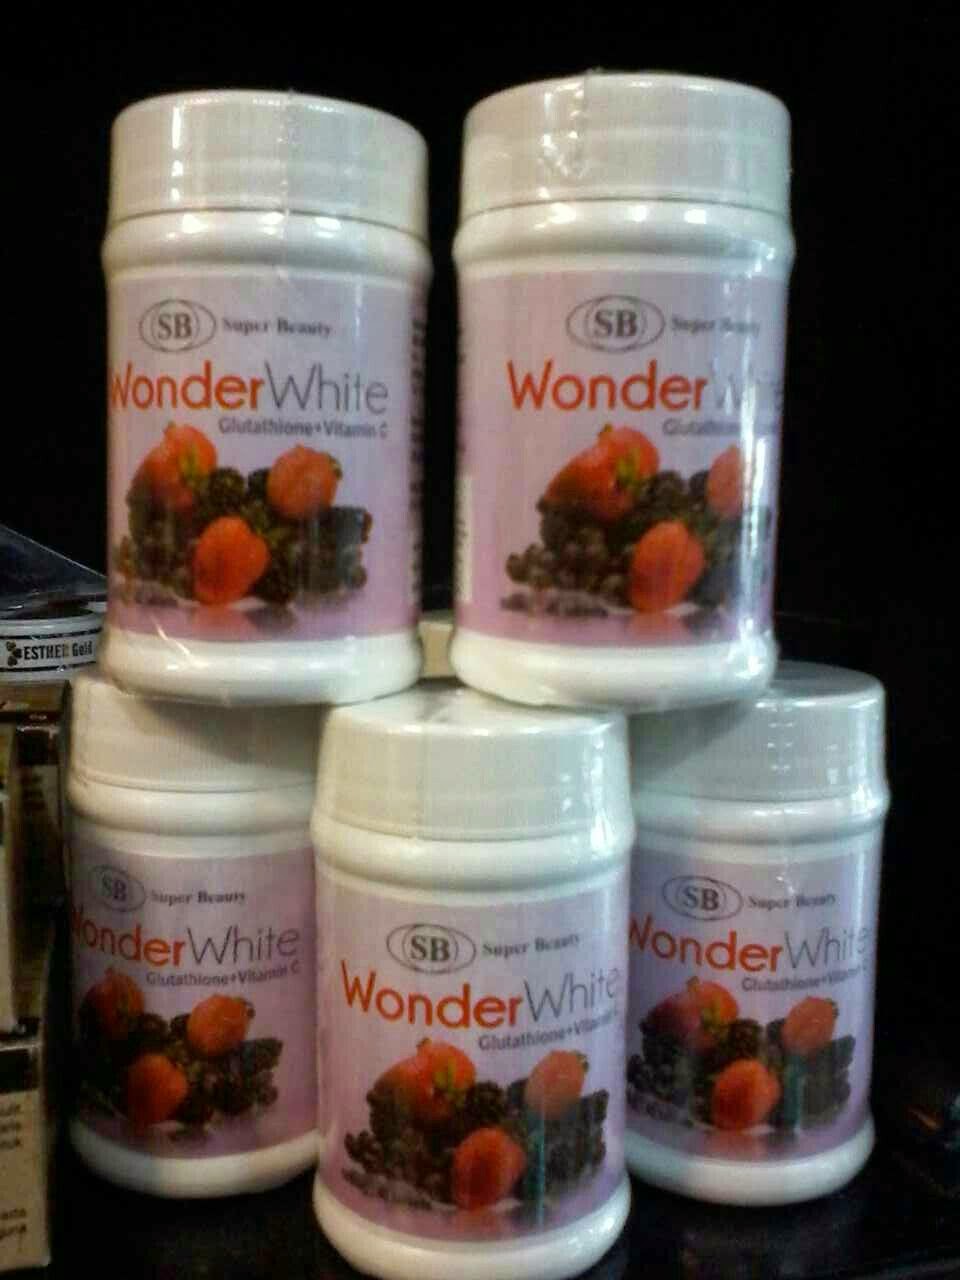 Wonder White SB SuperBeauty